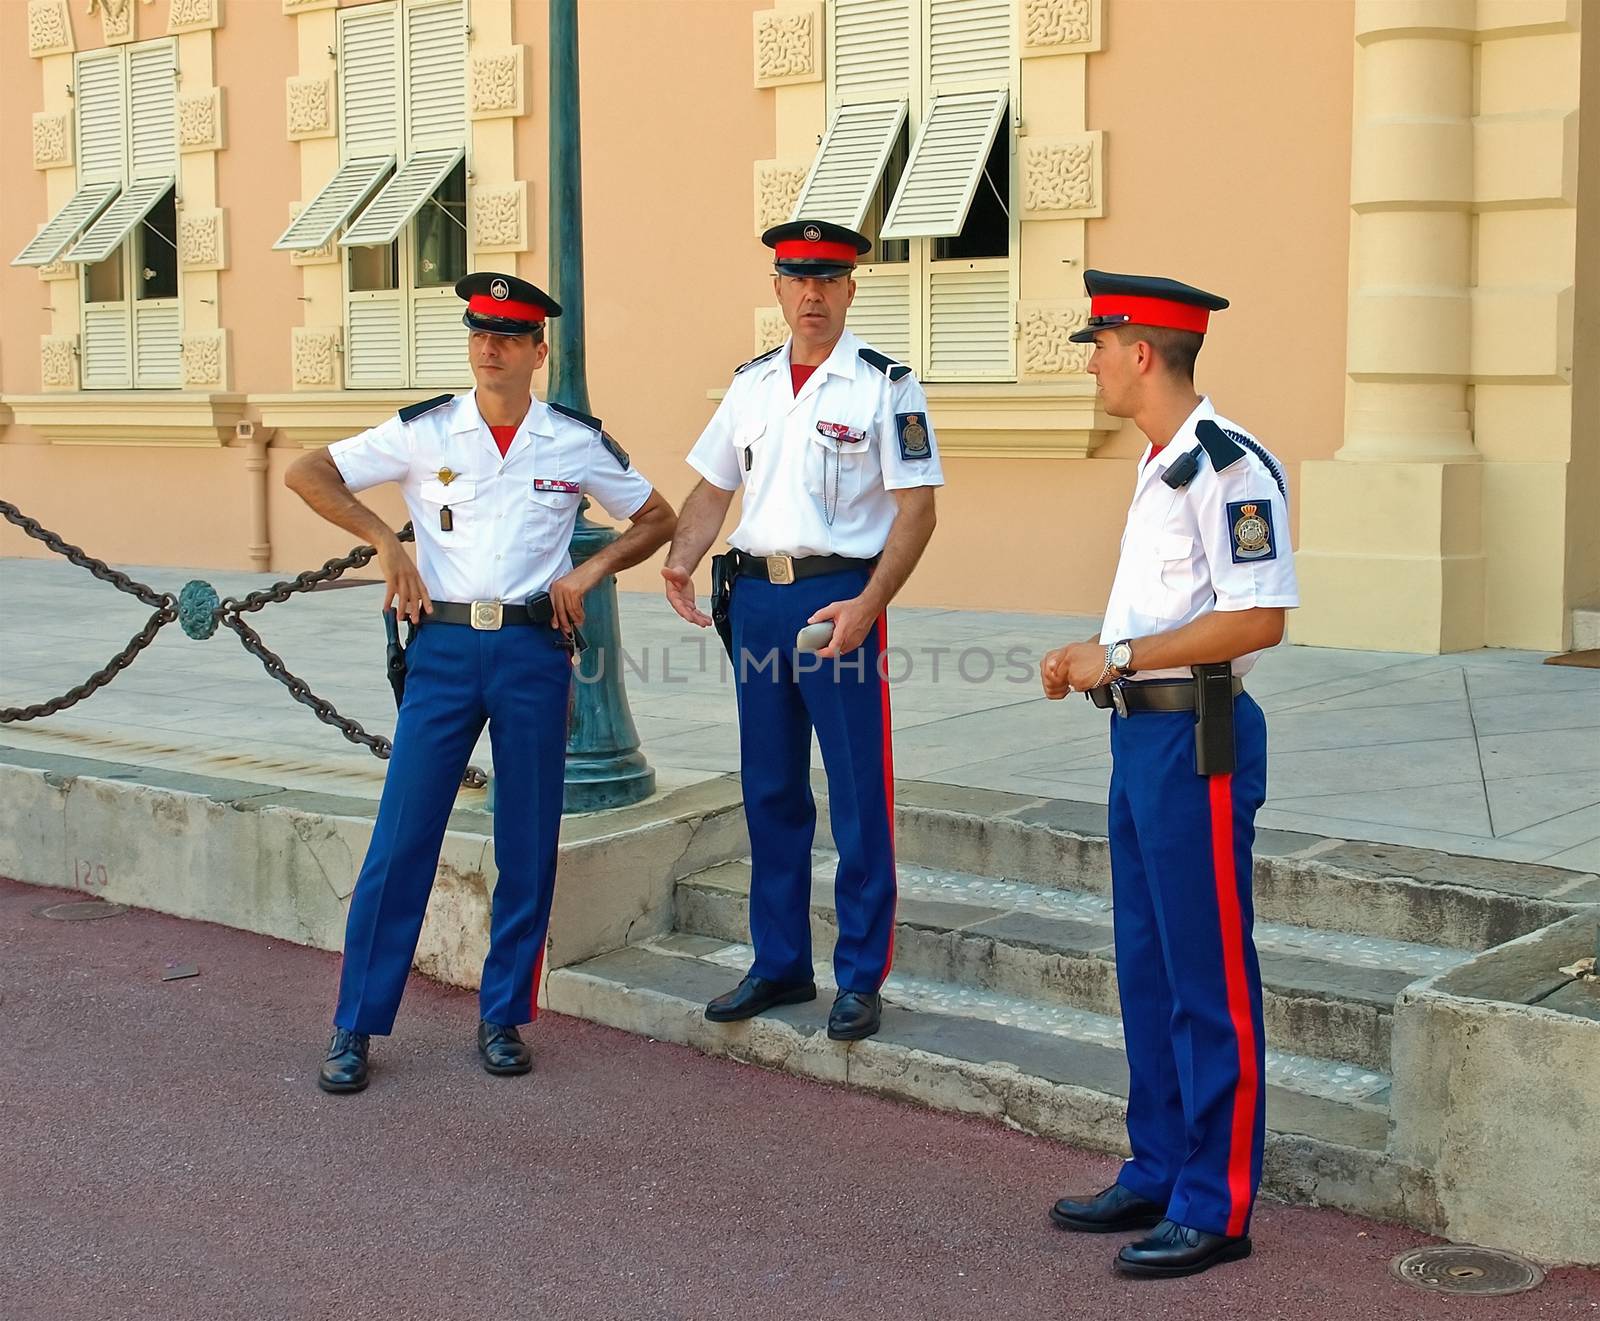 Monaco, Monte Carlo: Royal guard